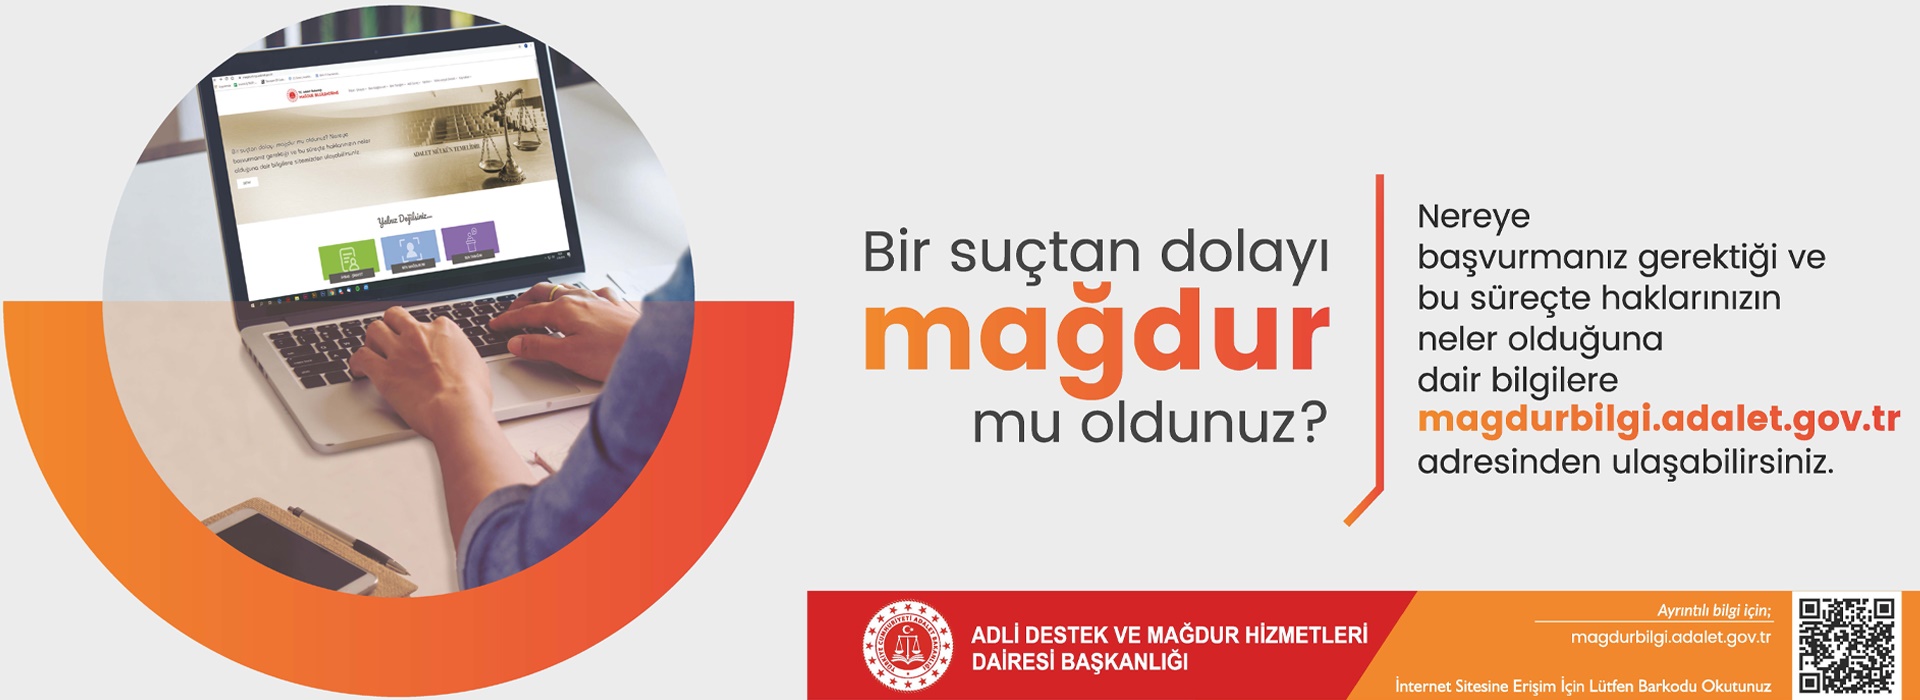 www.magdurbilgi.adalet.gov.tr